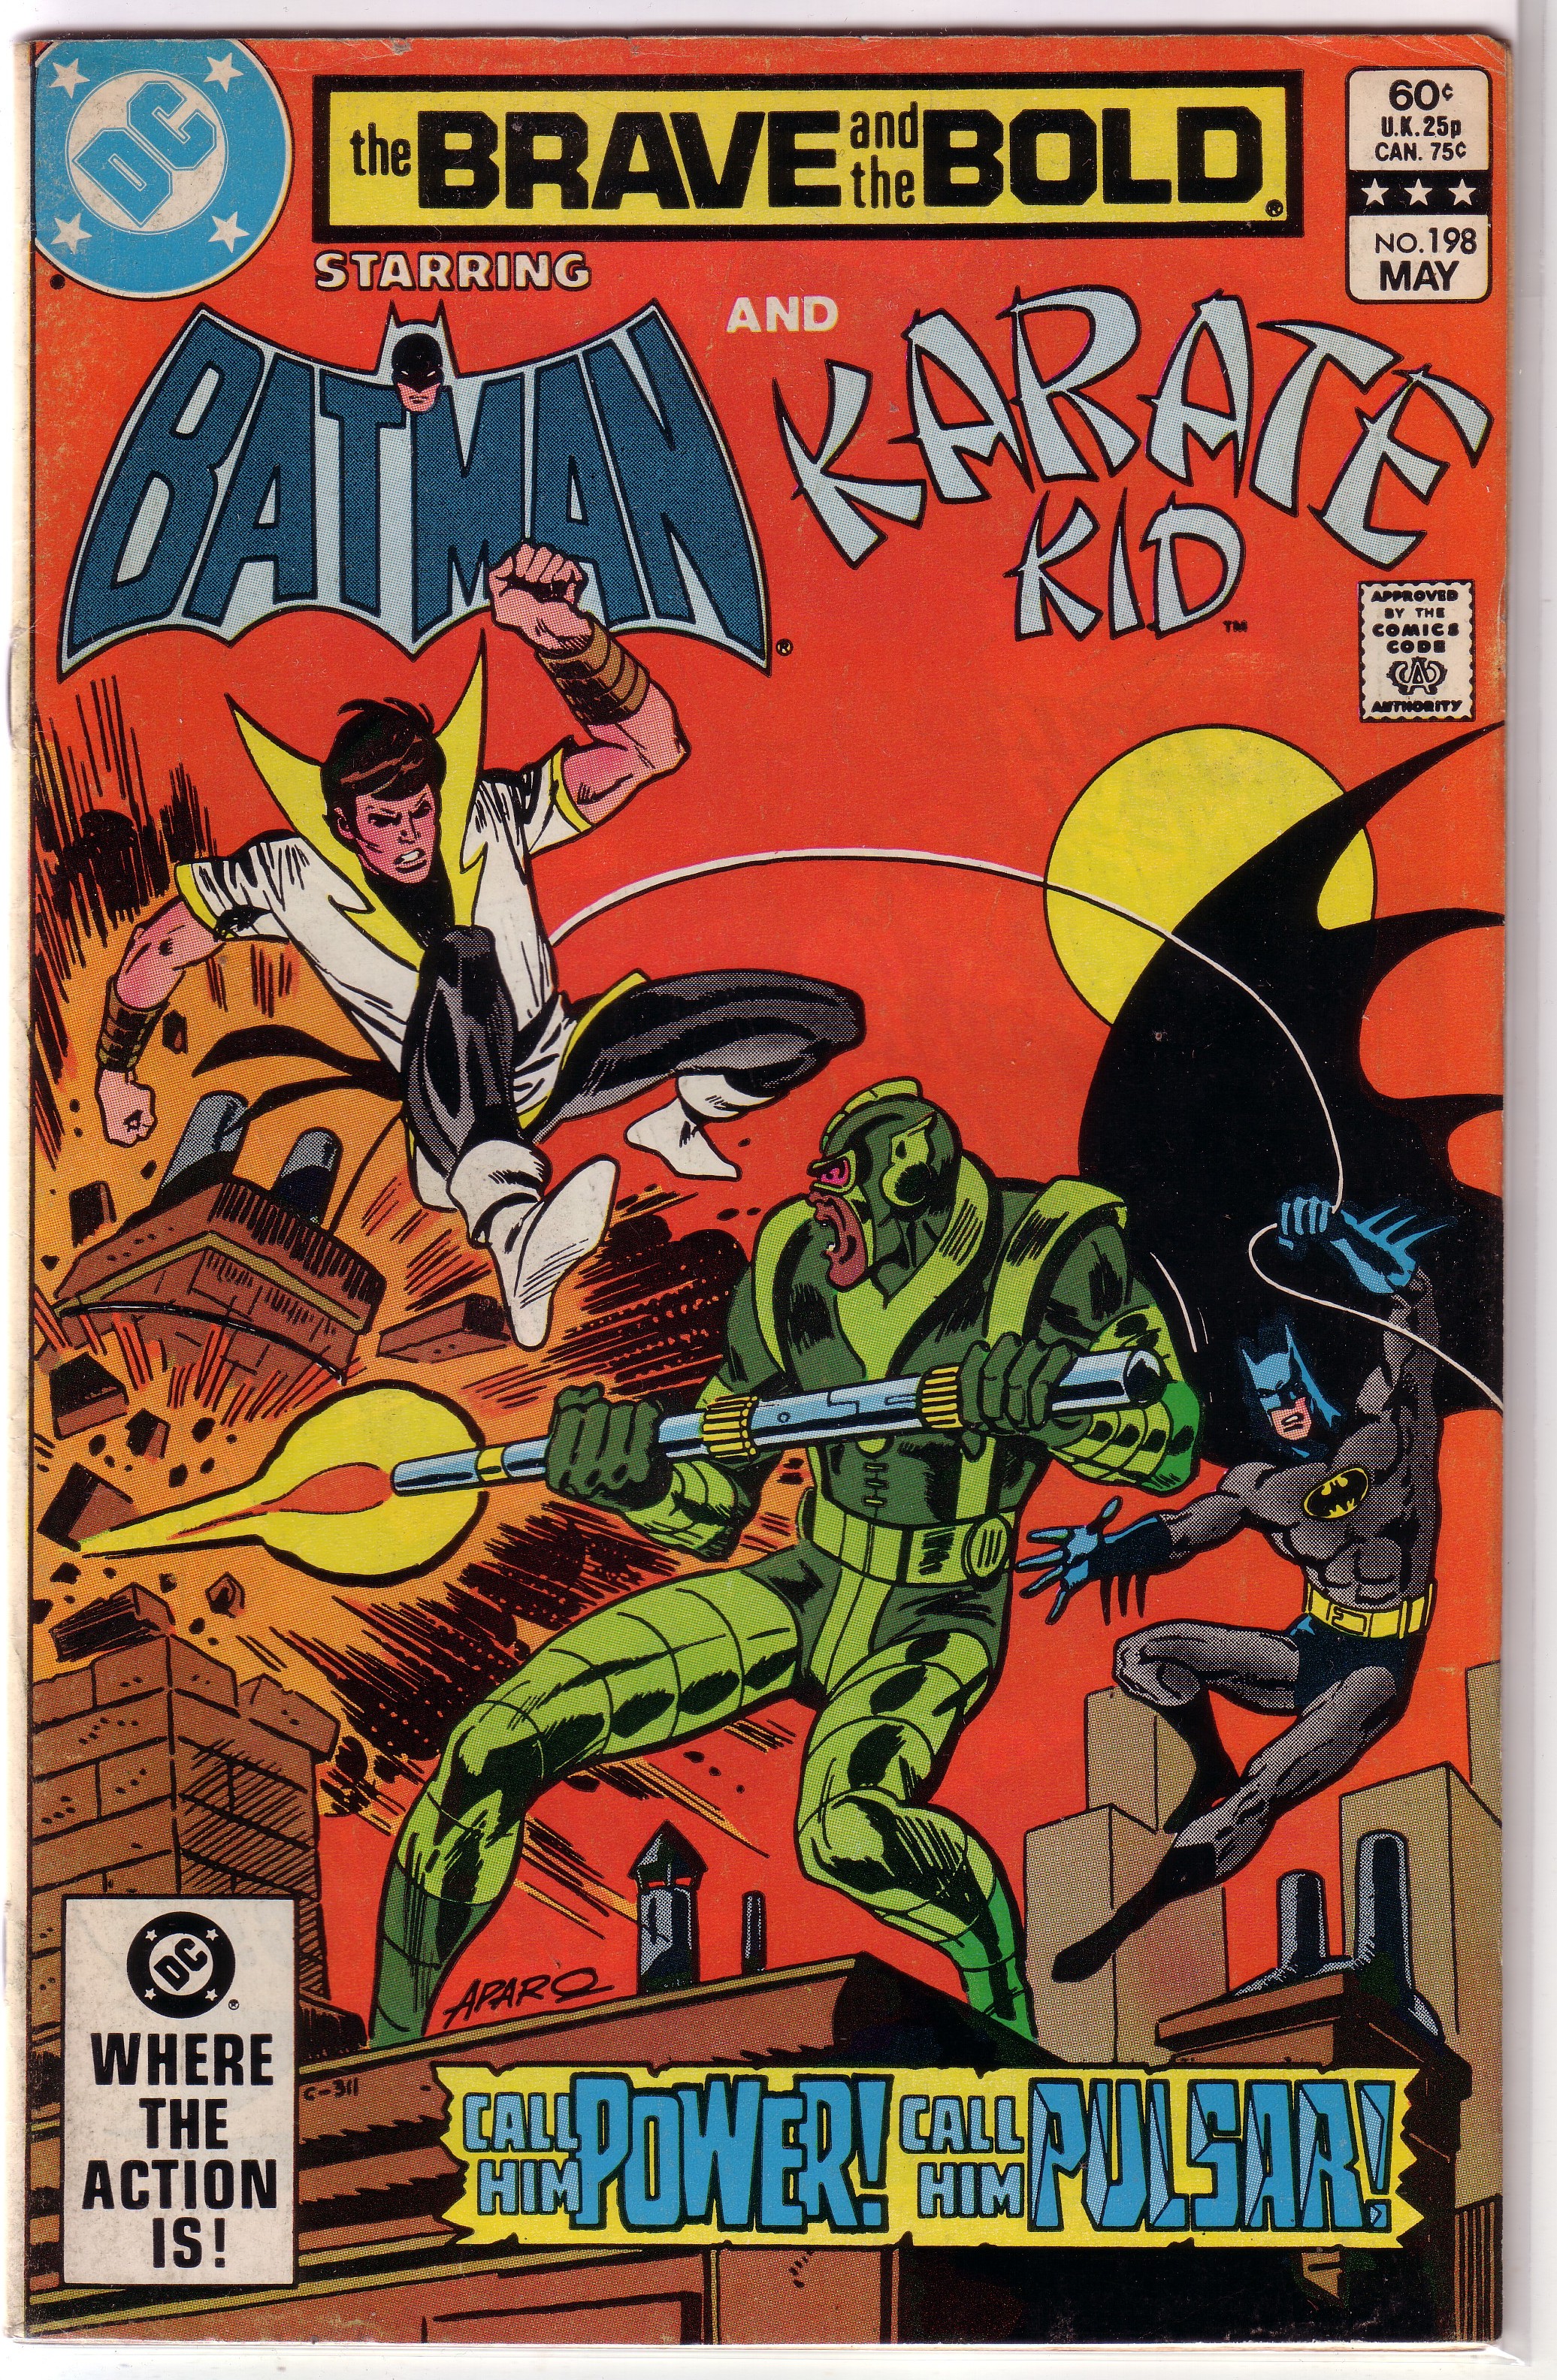 Brave and the Bold vol. 1 #198 VG Batman/Karate Kid, Barr/Aparo | Comic  Books - Bronze Age, DC Comics, Batman, Superhero / HipComic